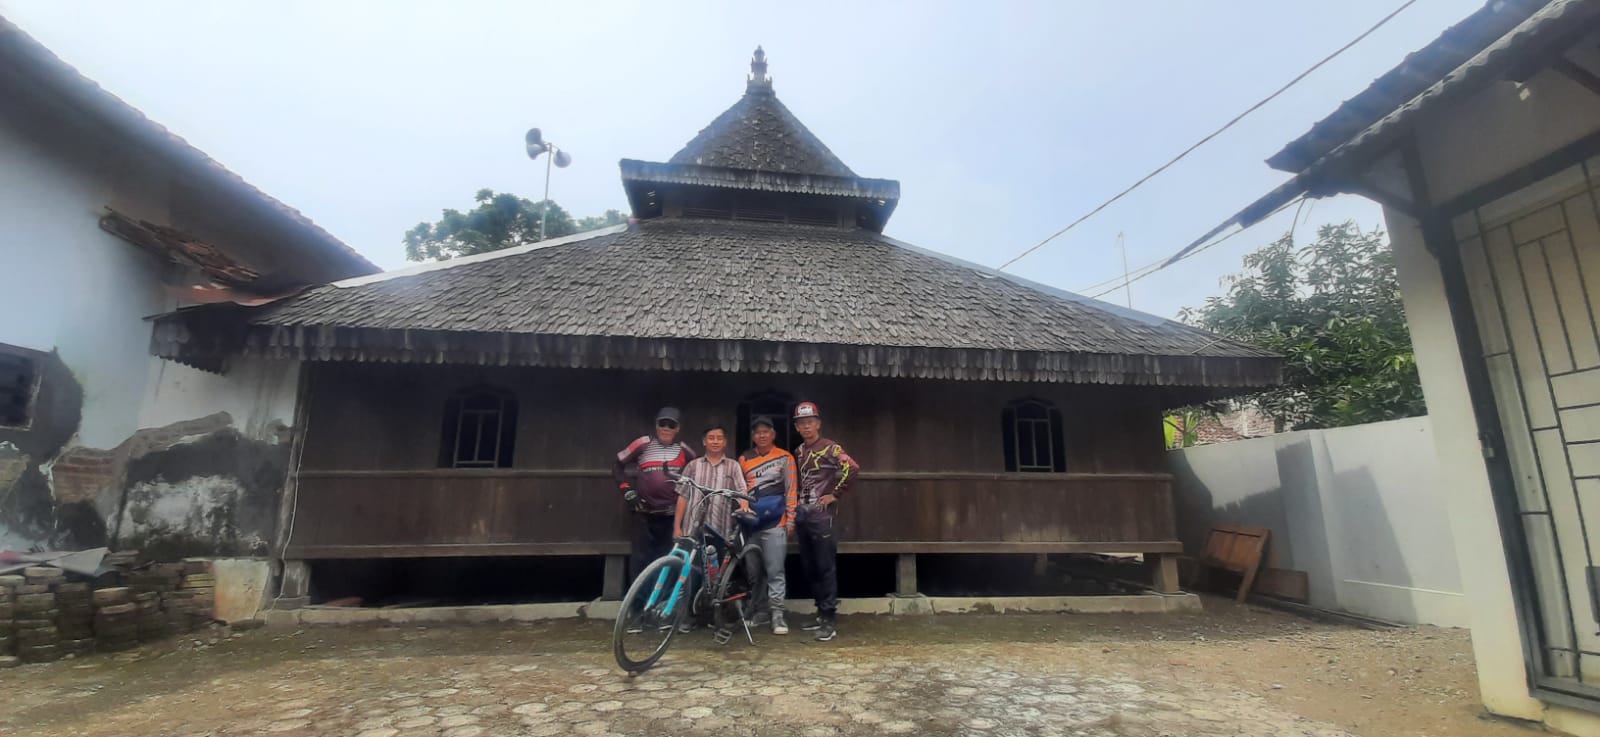 Masjid Kuno Bondan Indramayu, Bedug Ditabuh, Terdengar sampai Cirebon